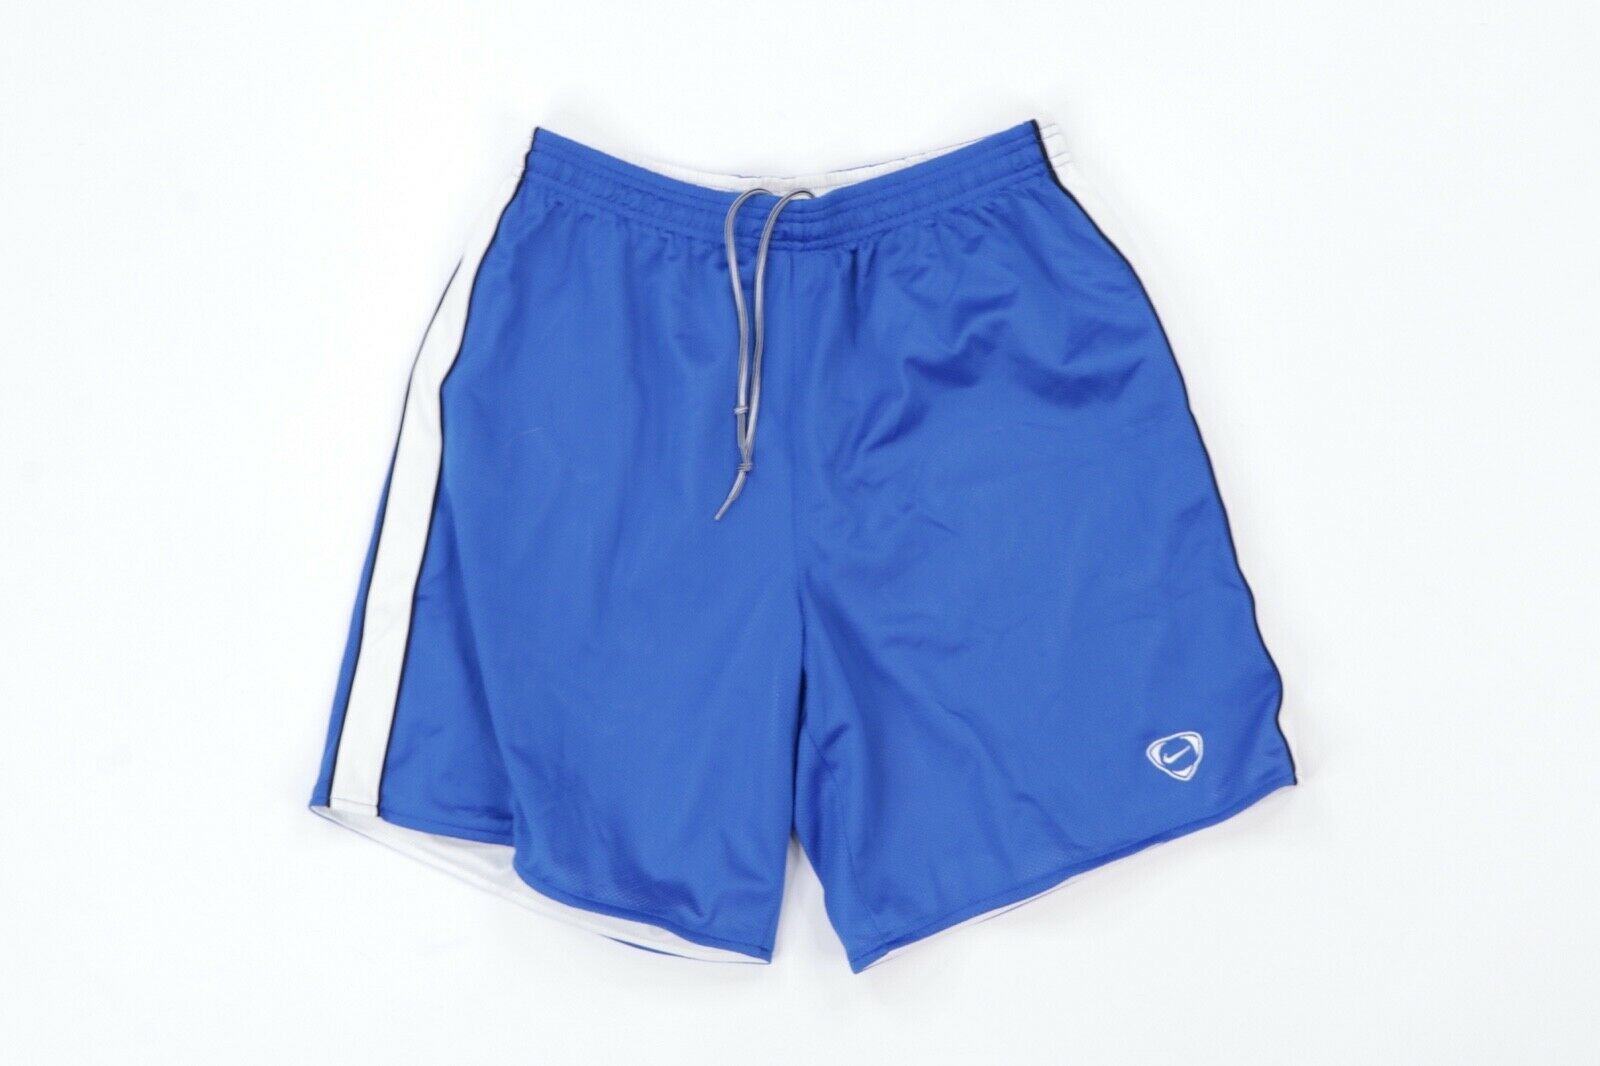 Nike Vintage Nike Total 90 Reversible Soccer Shorts Blue White M Size US 30 / EU 46 - 1 Preview